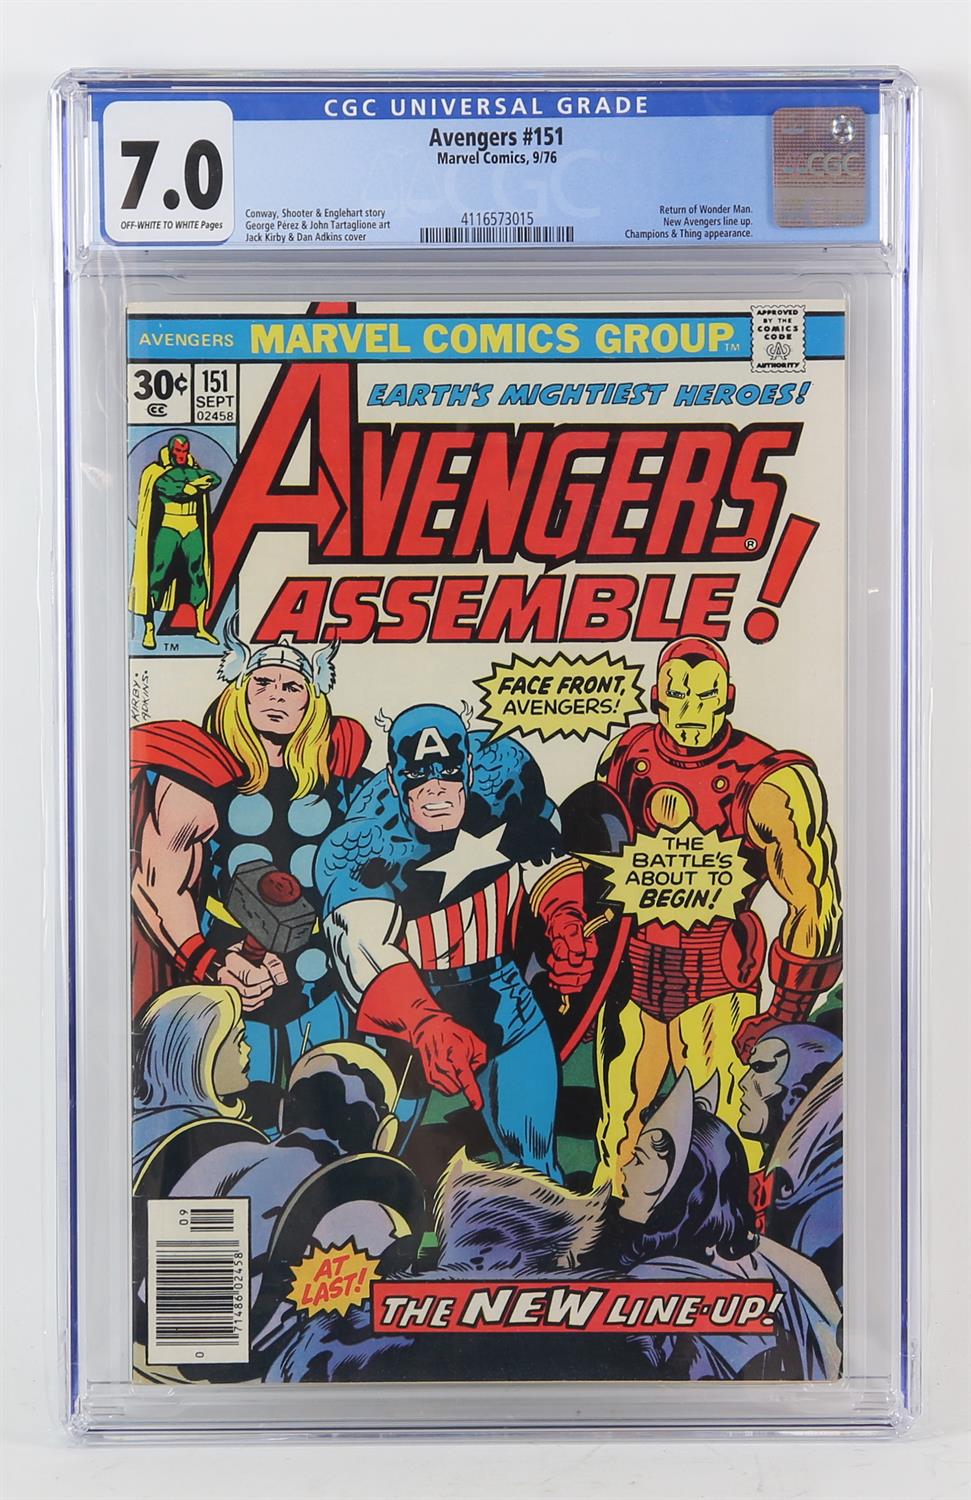 Marvel Comics: The Avengers, No. 151, CGC Universal Grade 7.0 (September 1976) – Marvel Comics 9/76